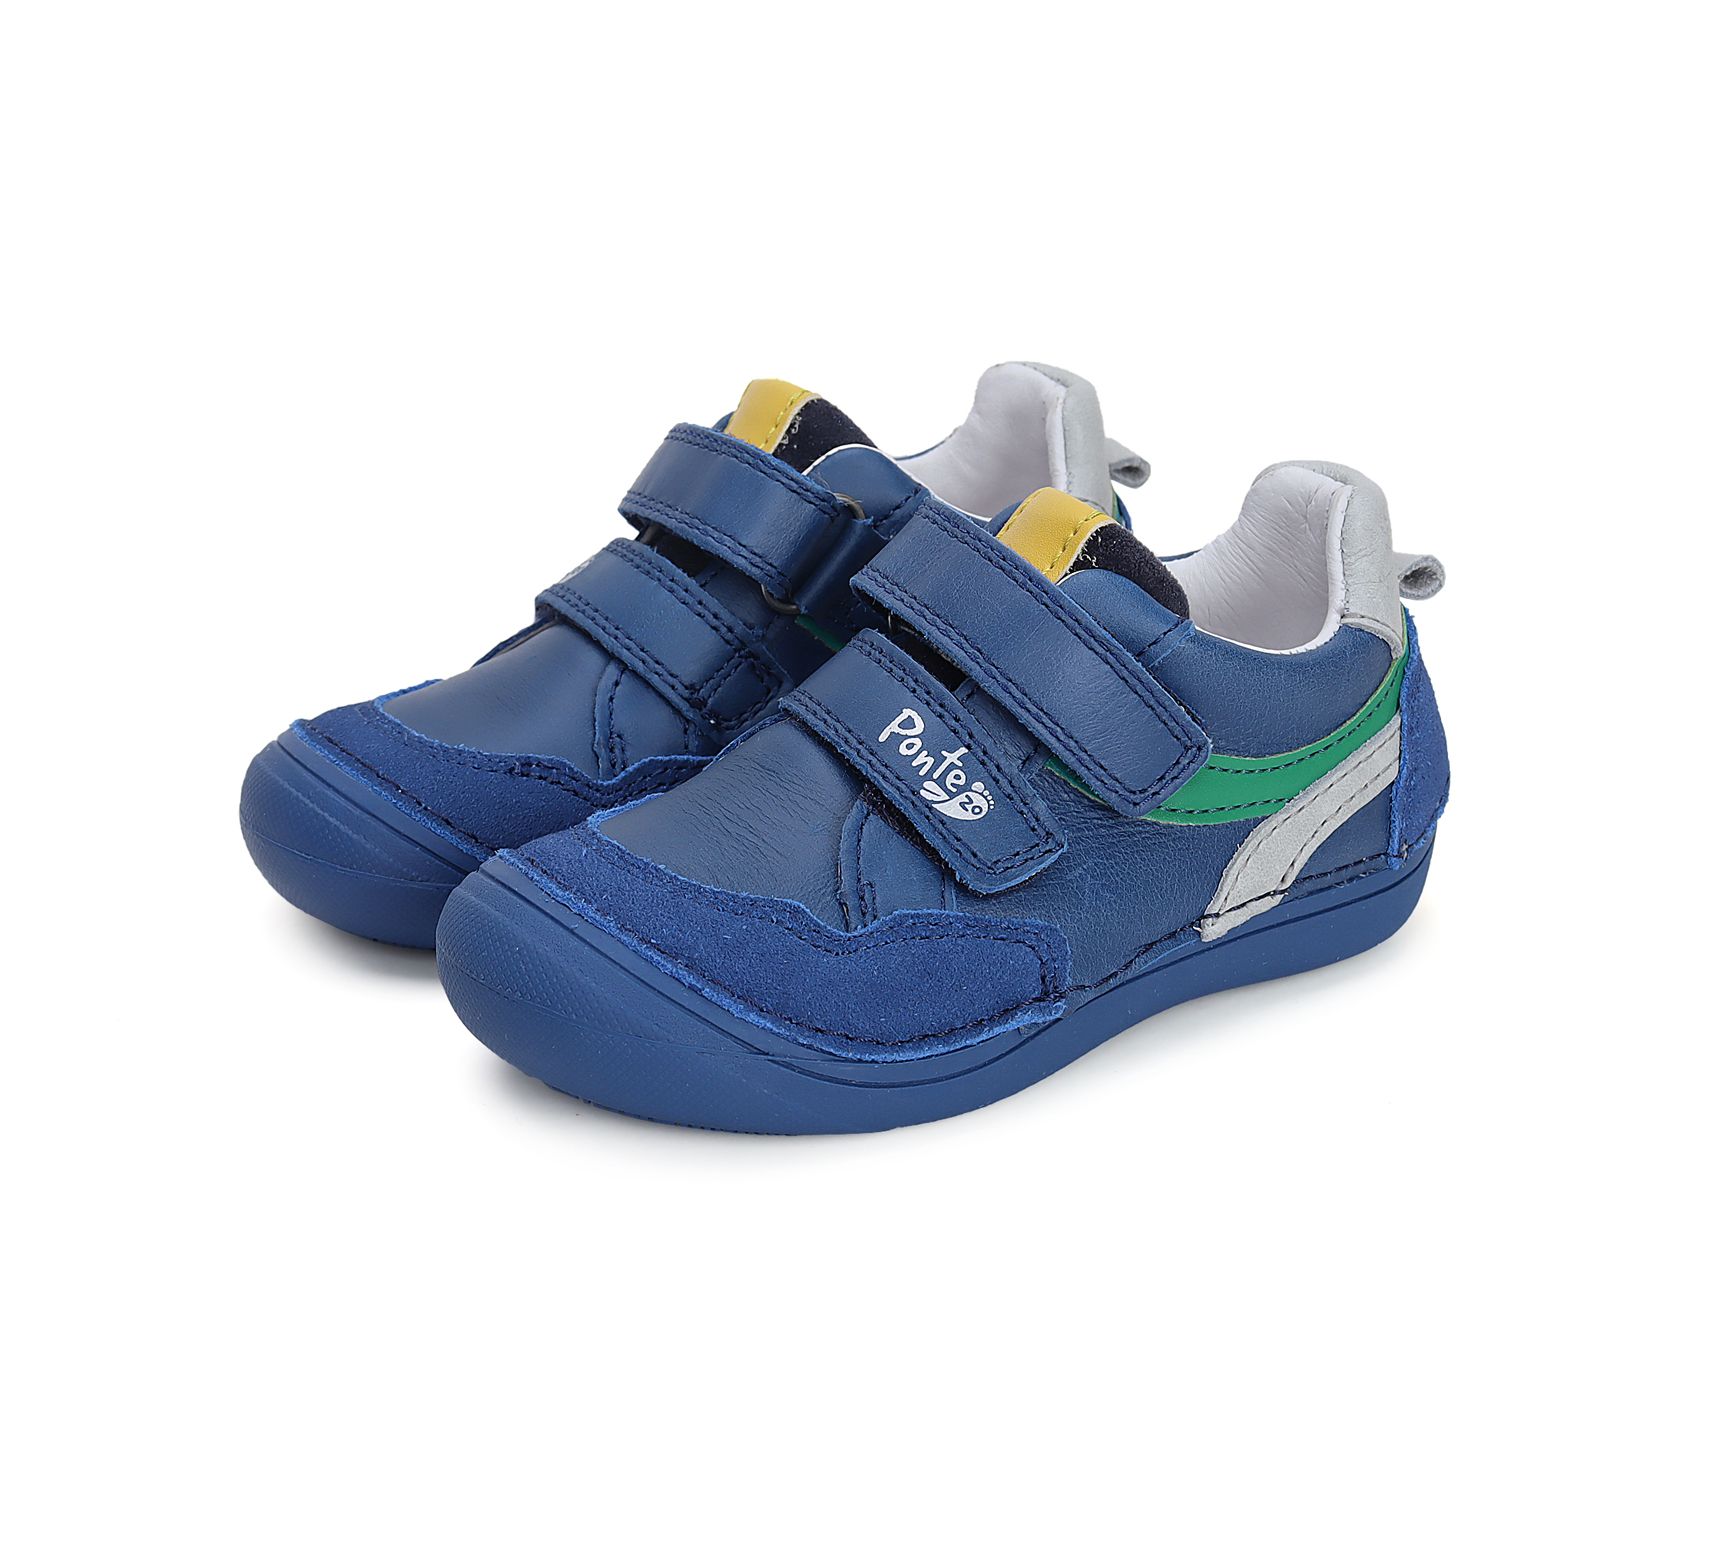 PONTE20 átmeneti bőr cipő DA03-4-1221 BERMUSDA BLUE 24-29  méretben